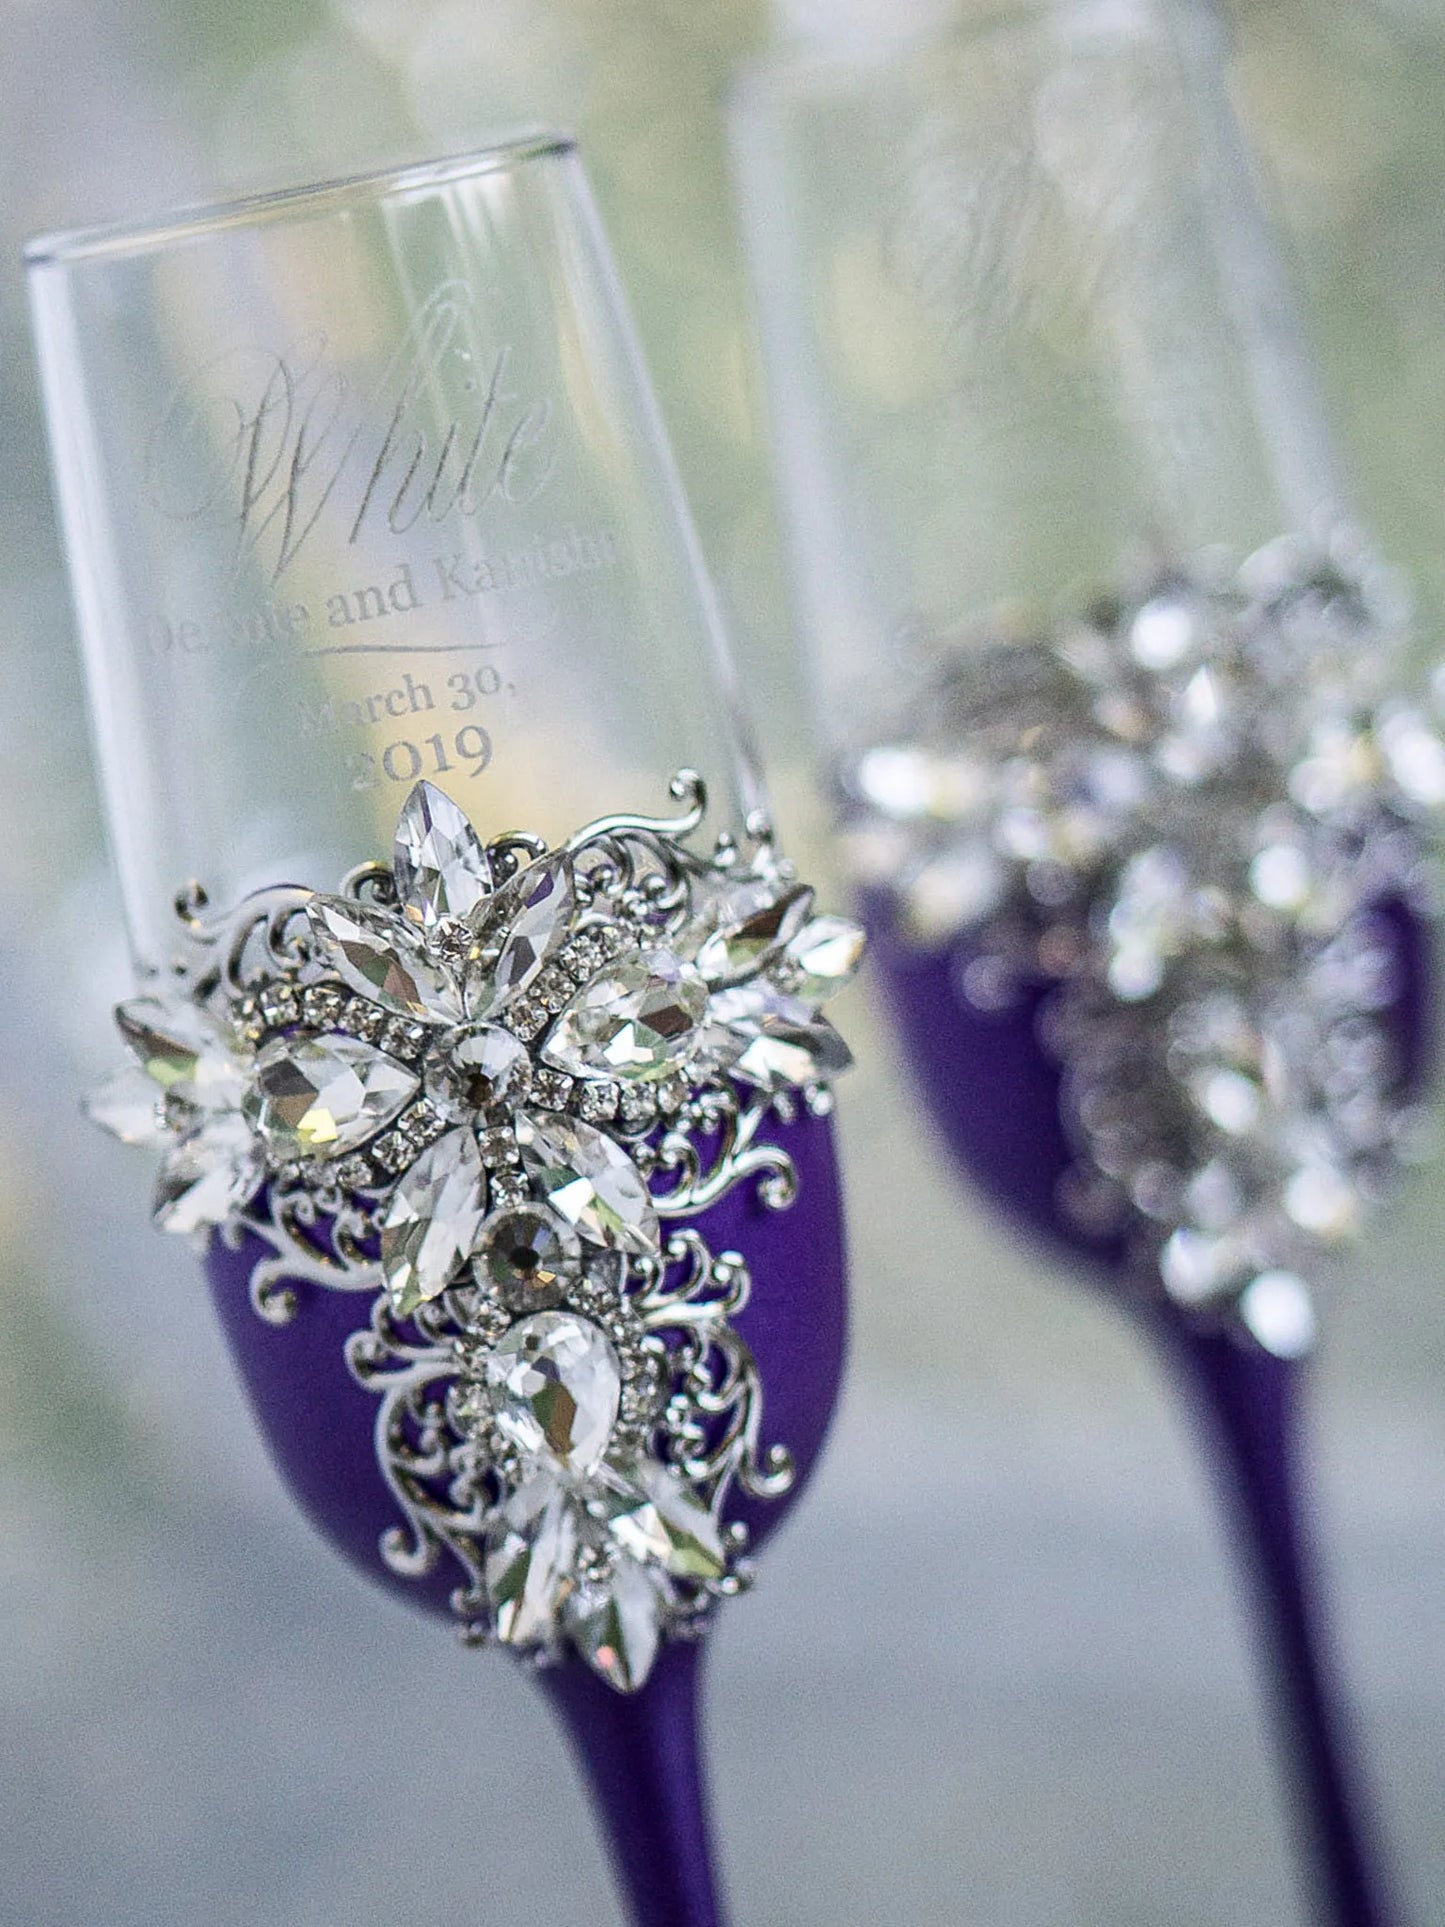 Personalized wedding champagne glasses in plum purple